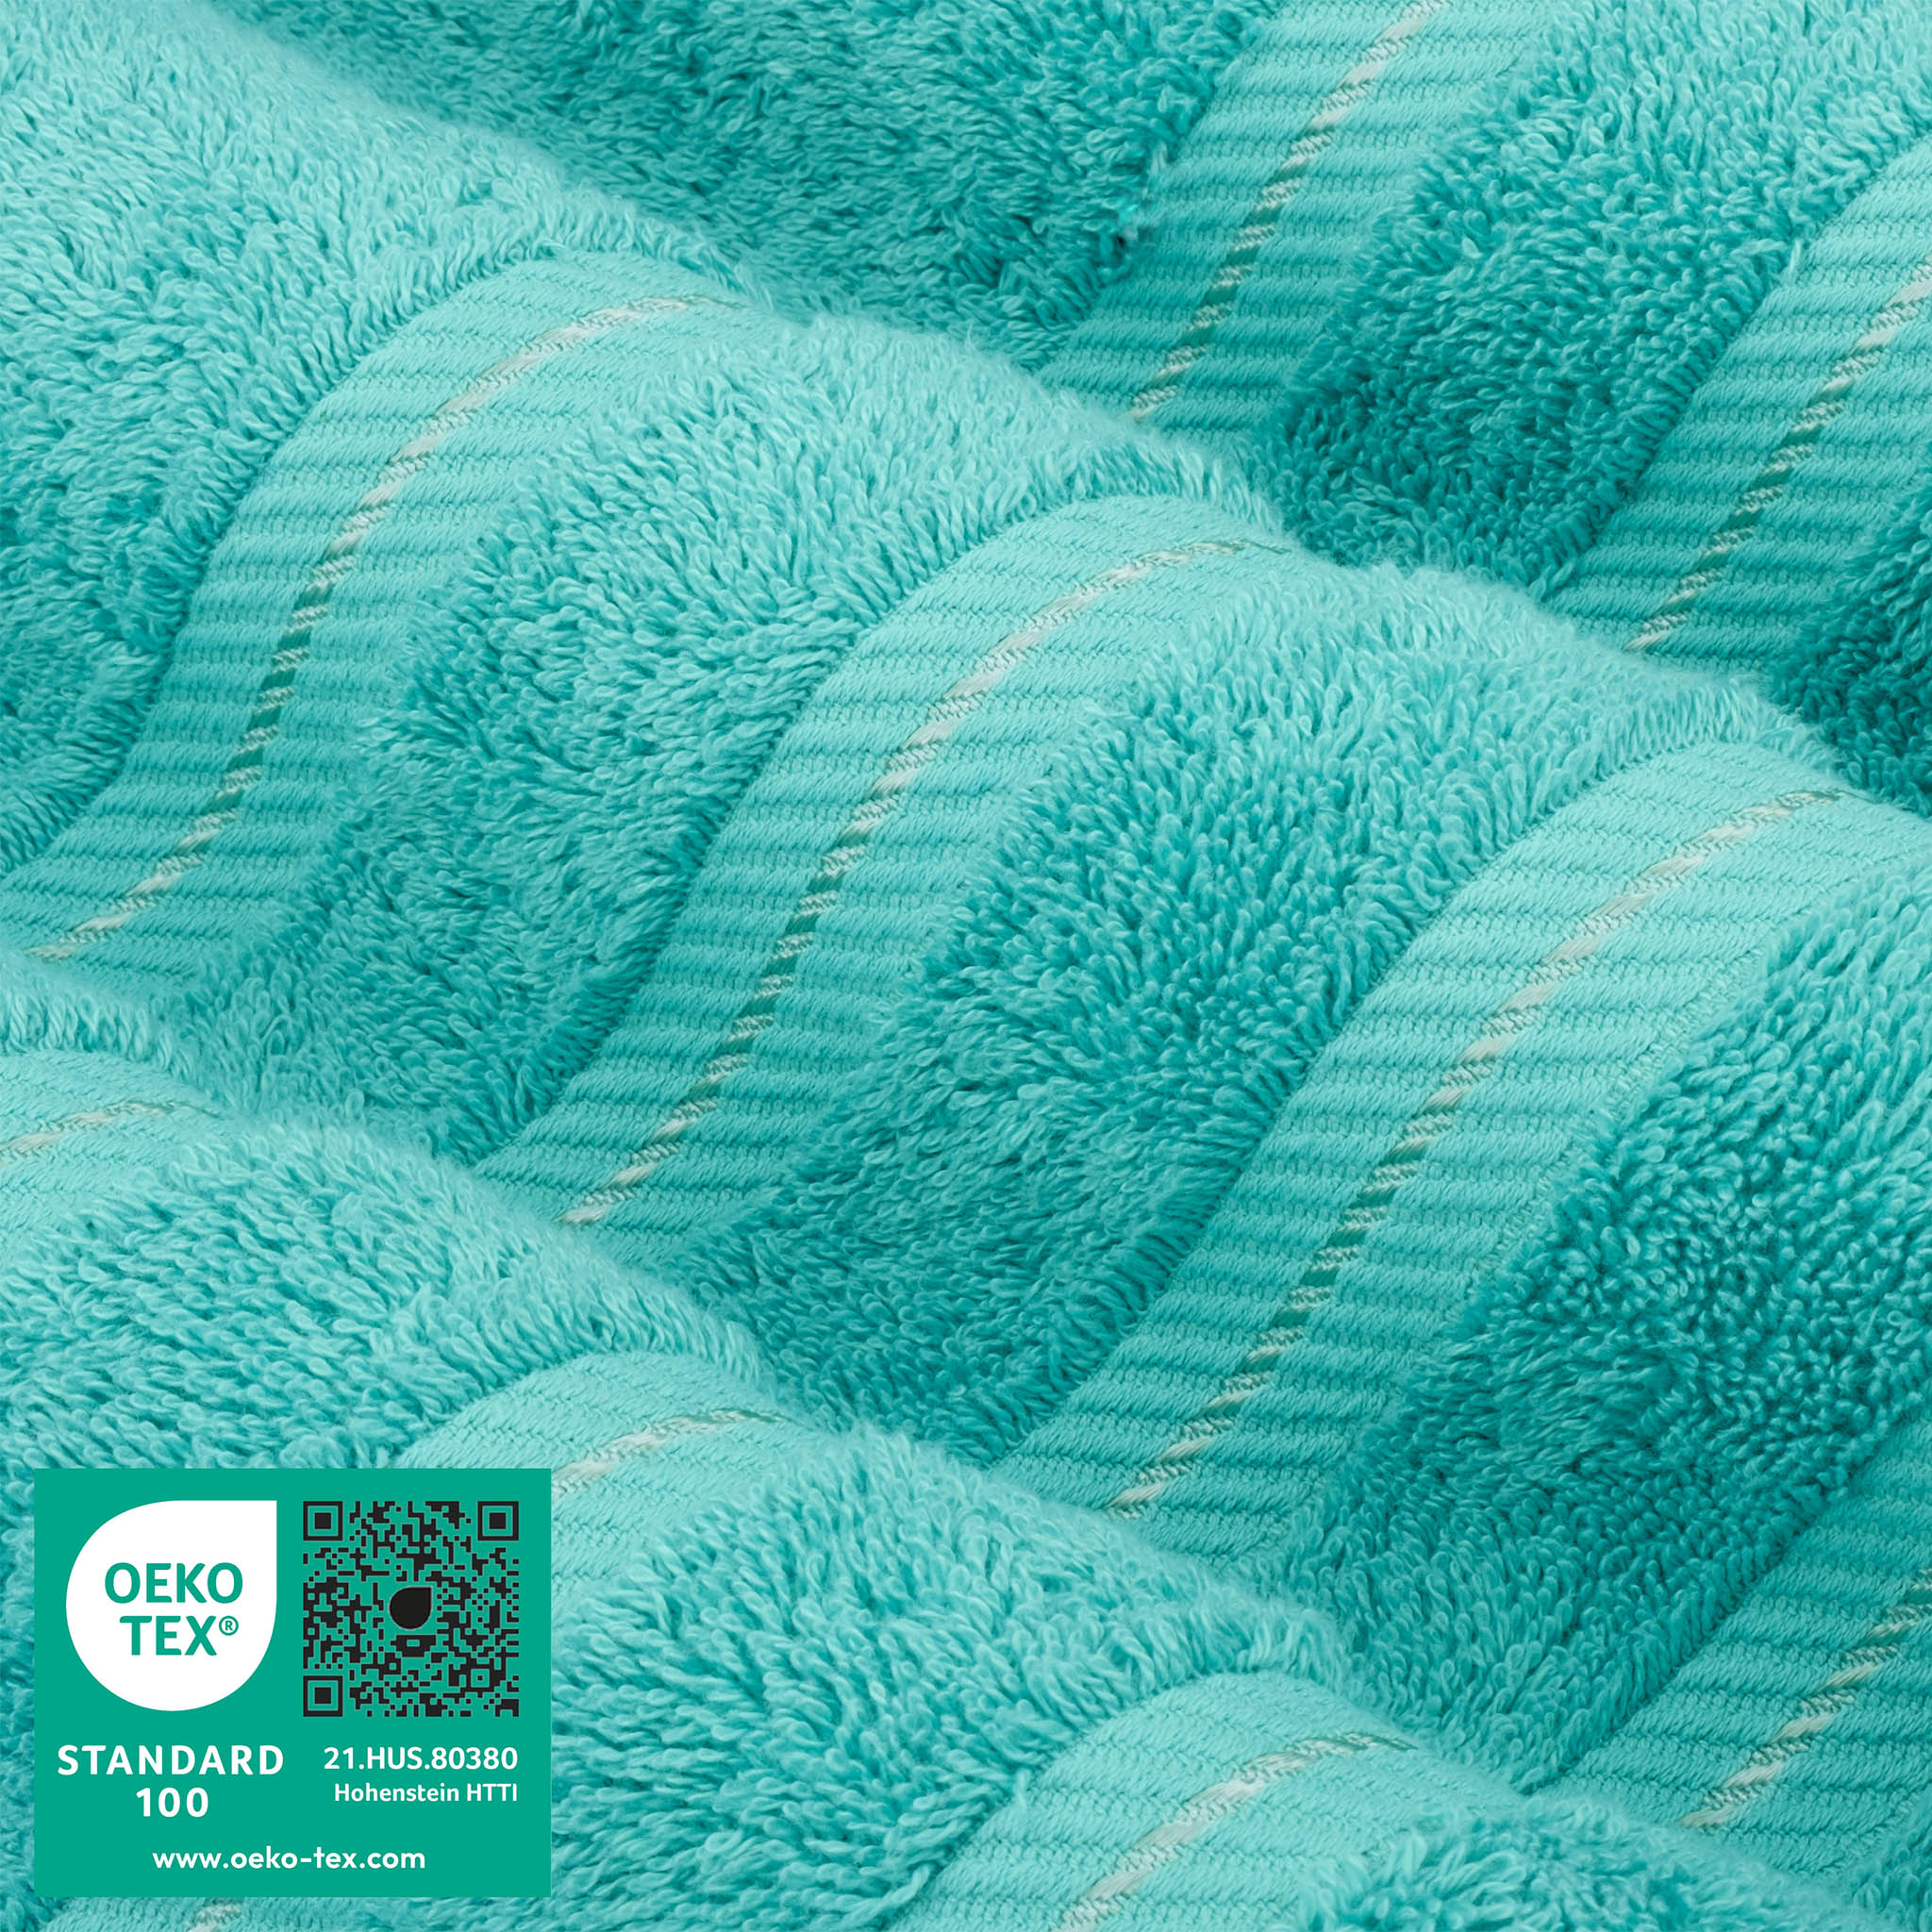  American Soft Linen 100% Turkish Cotton 4 Pack Hand Towel Set  turquoise-blue-3